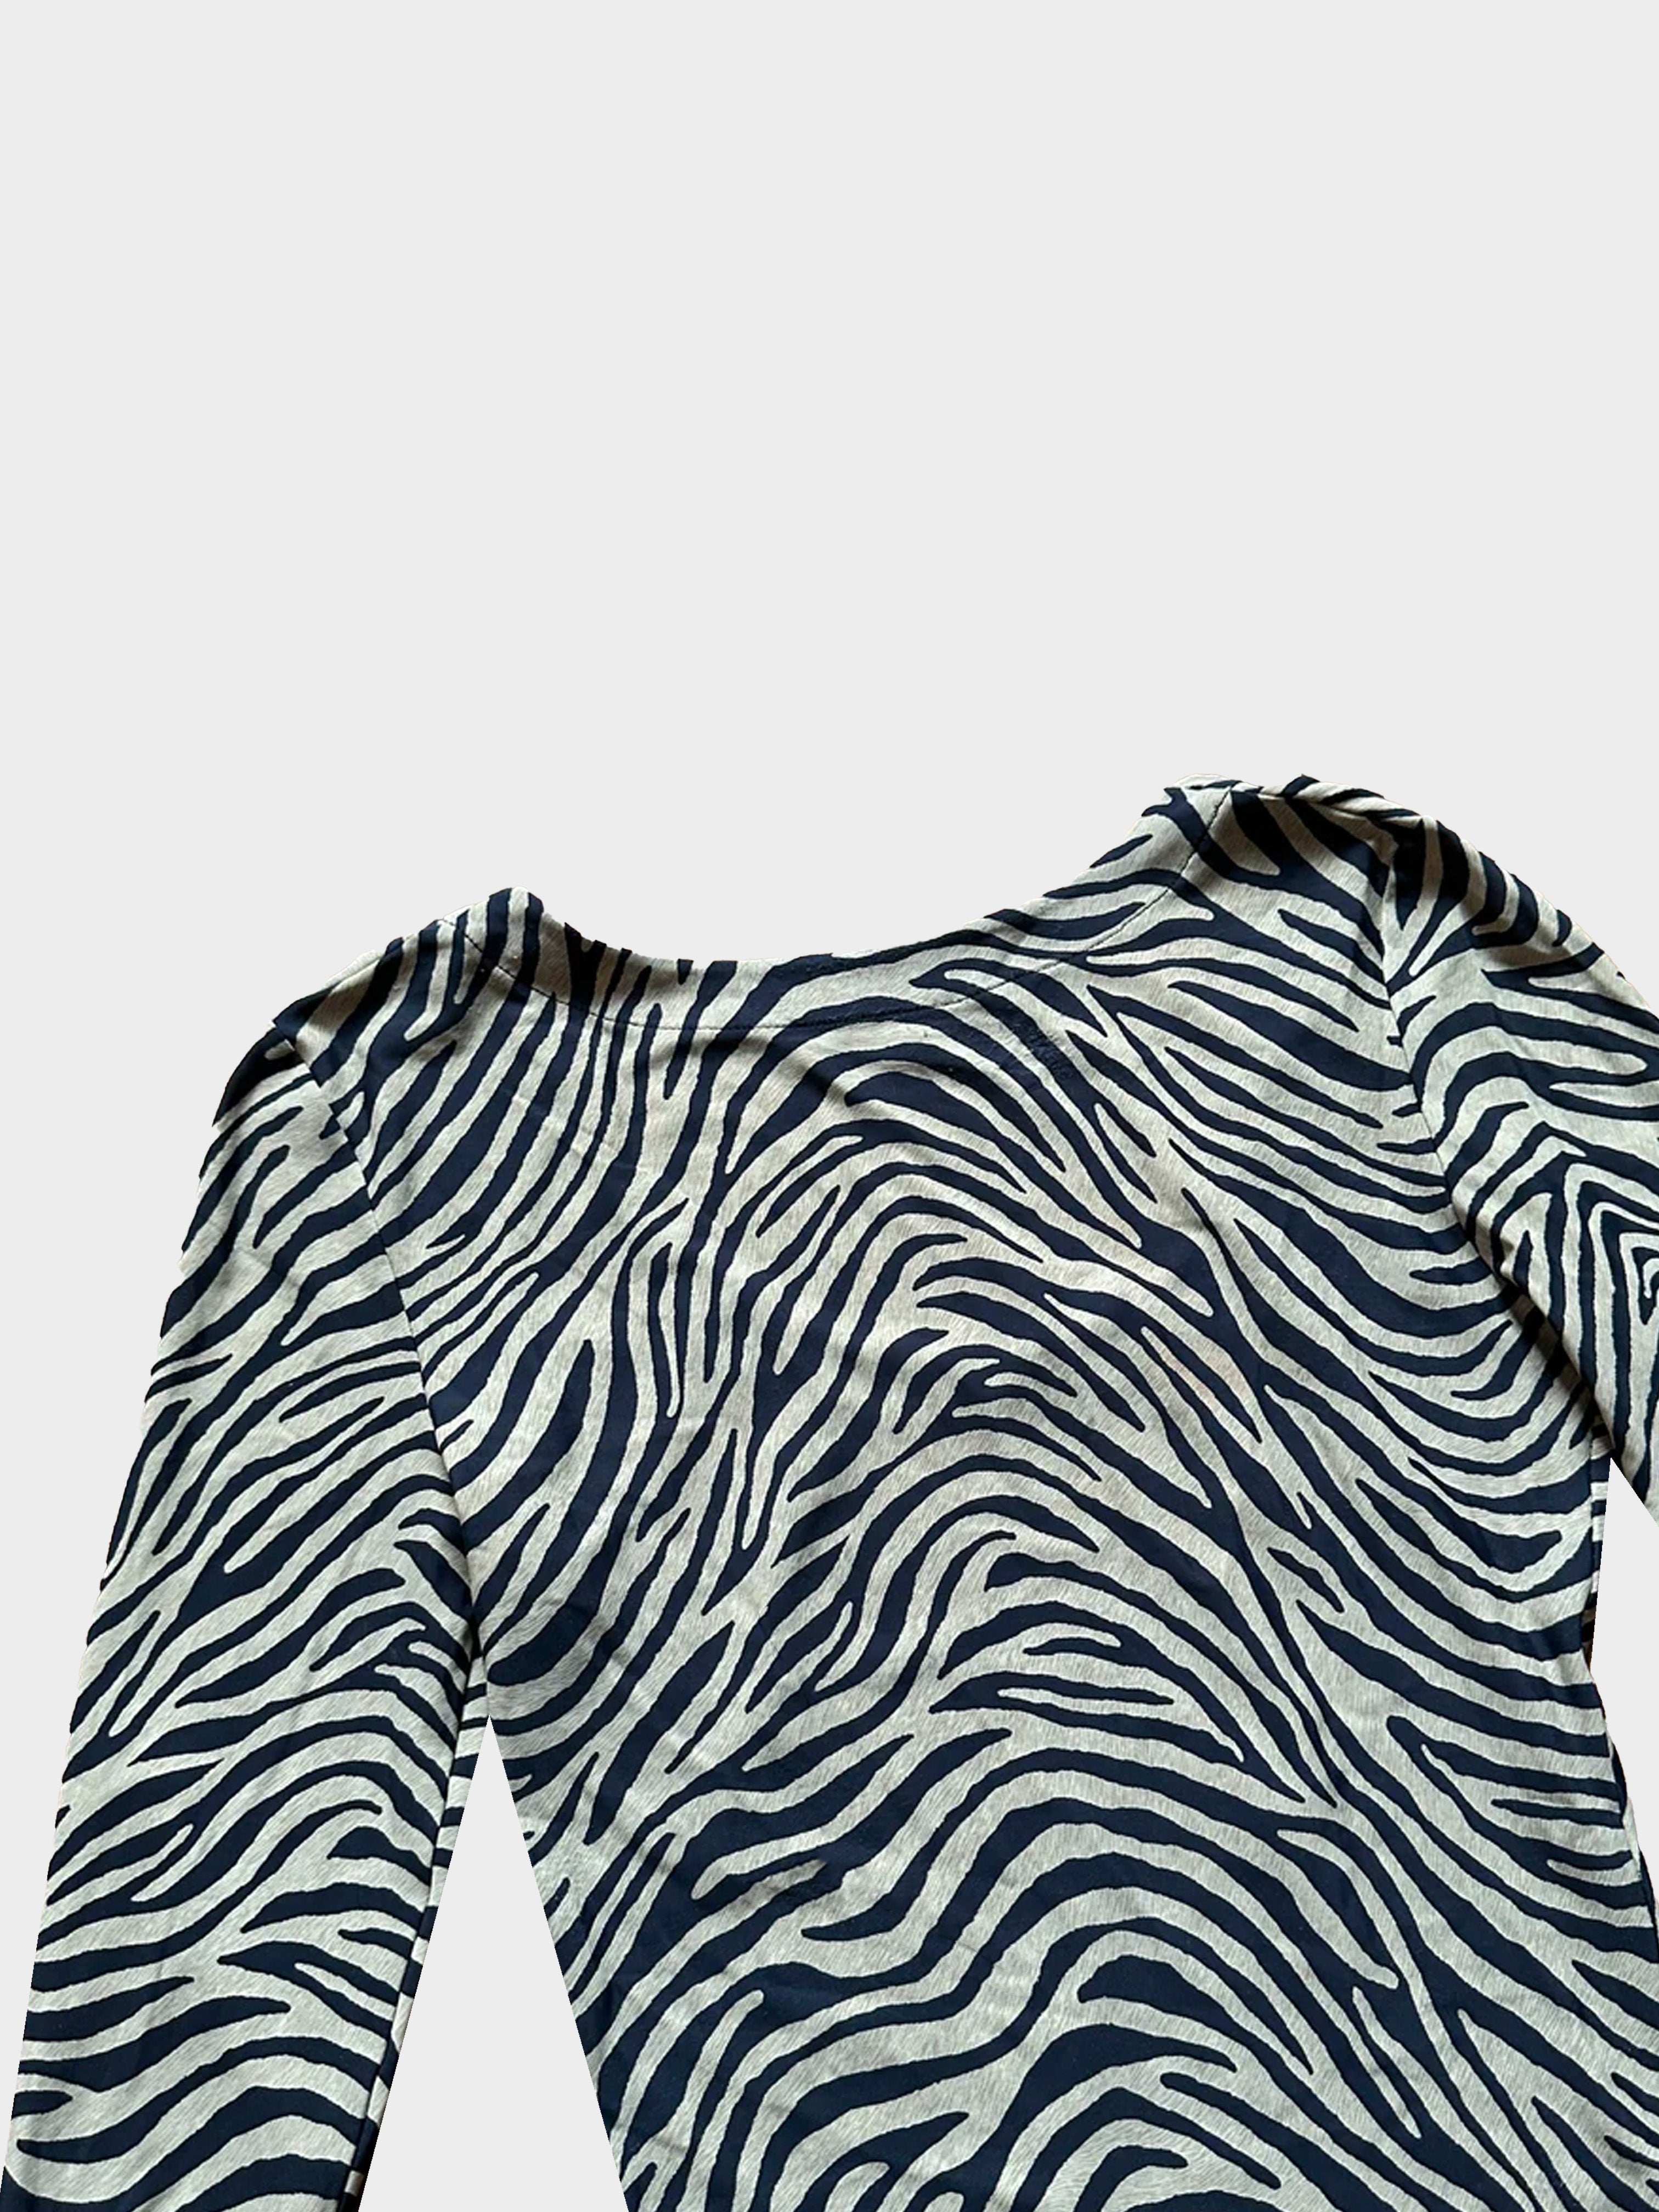 Christian Dior 2000s Zebra Bodysuit